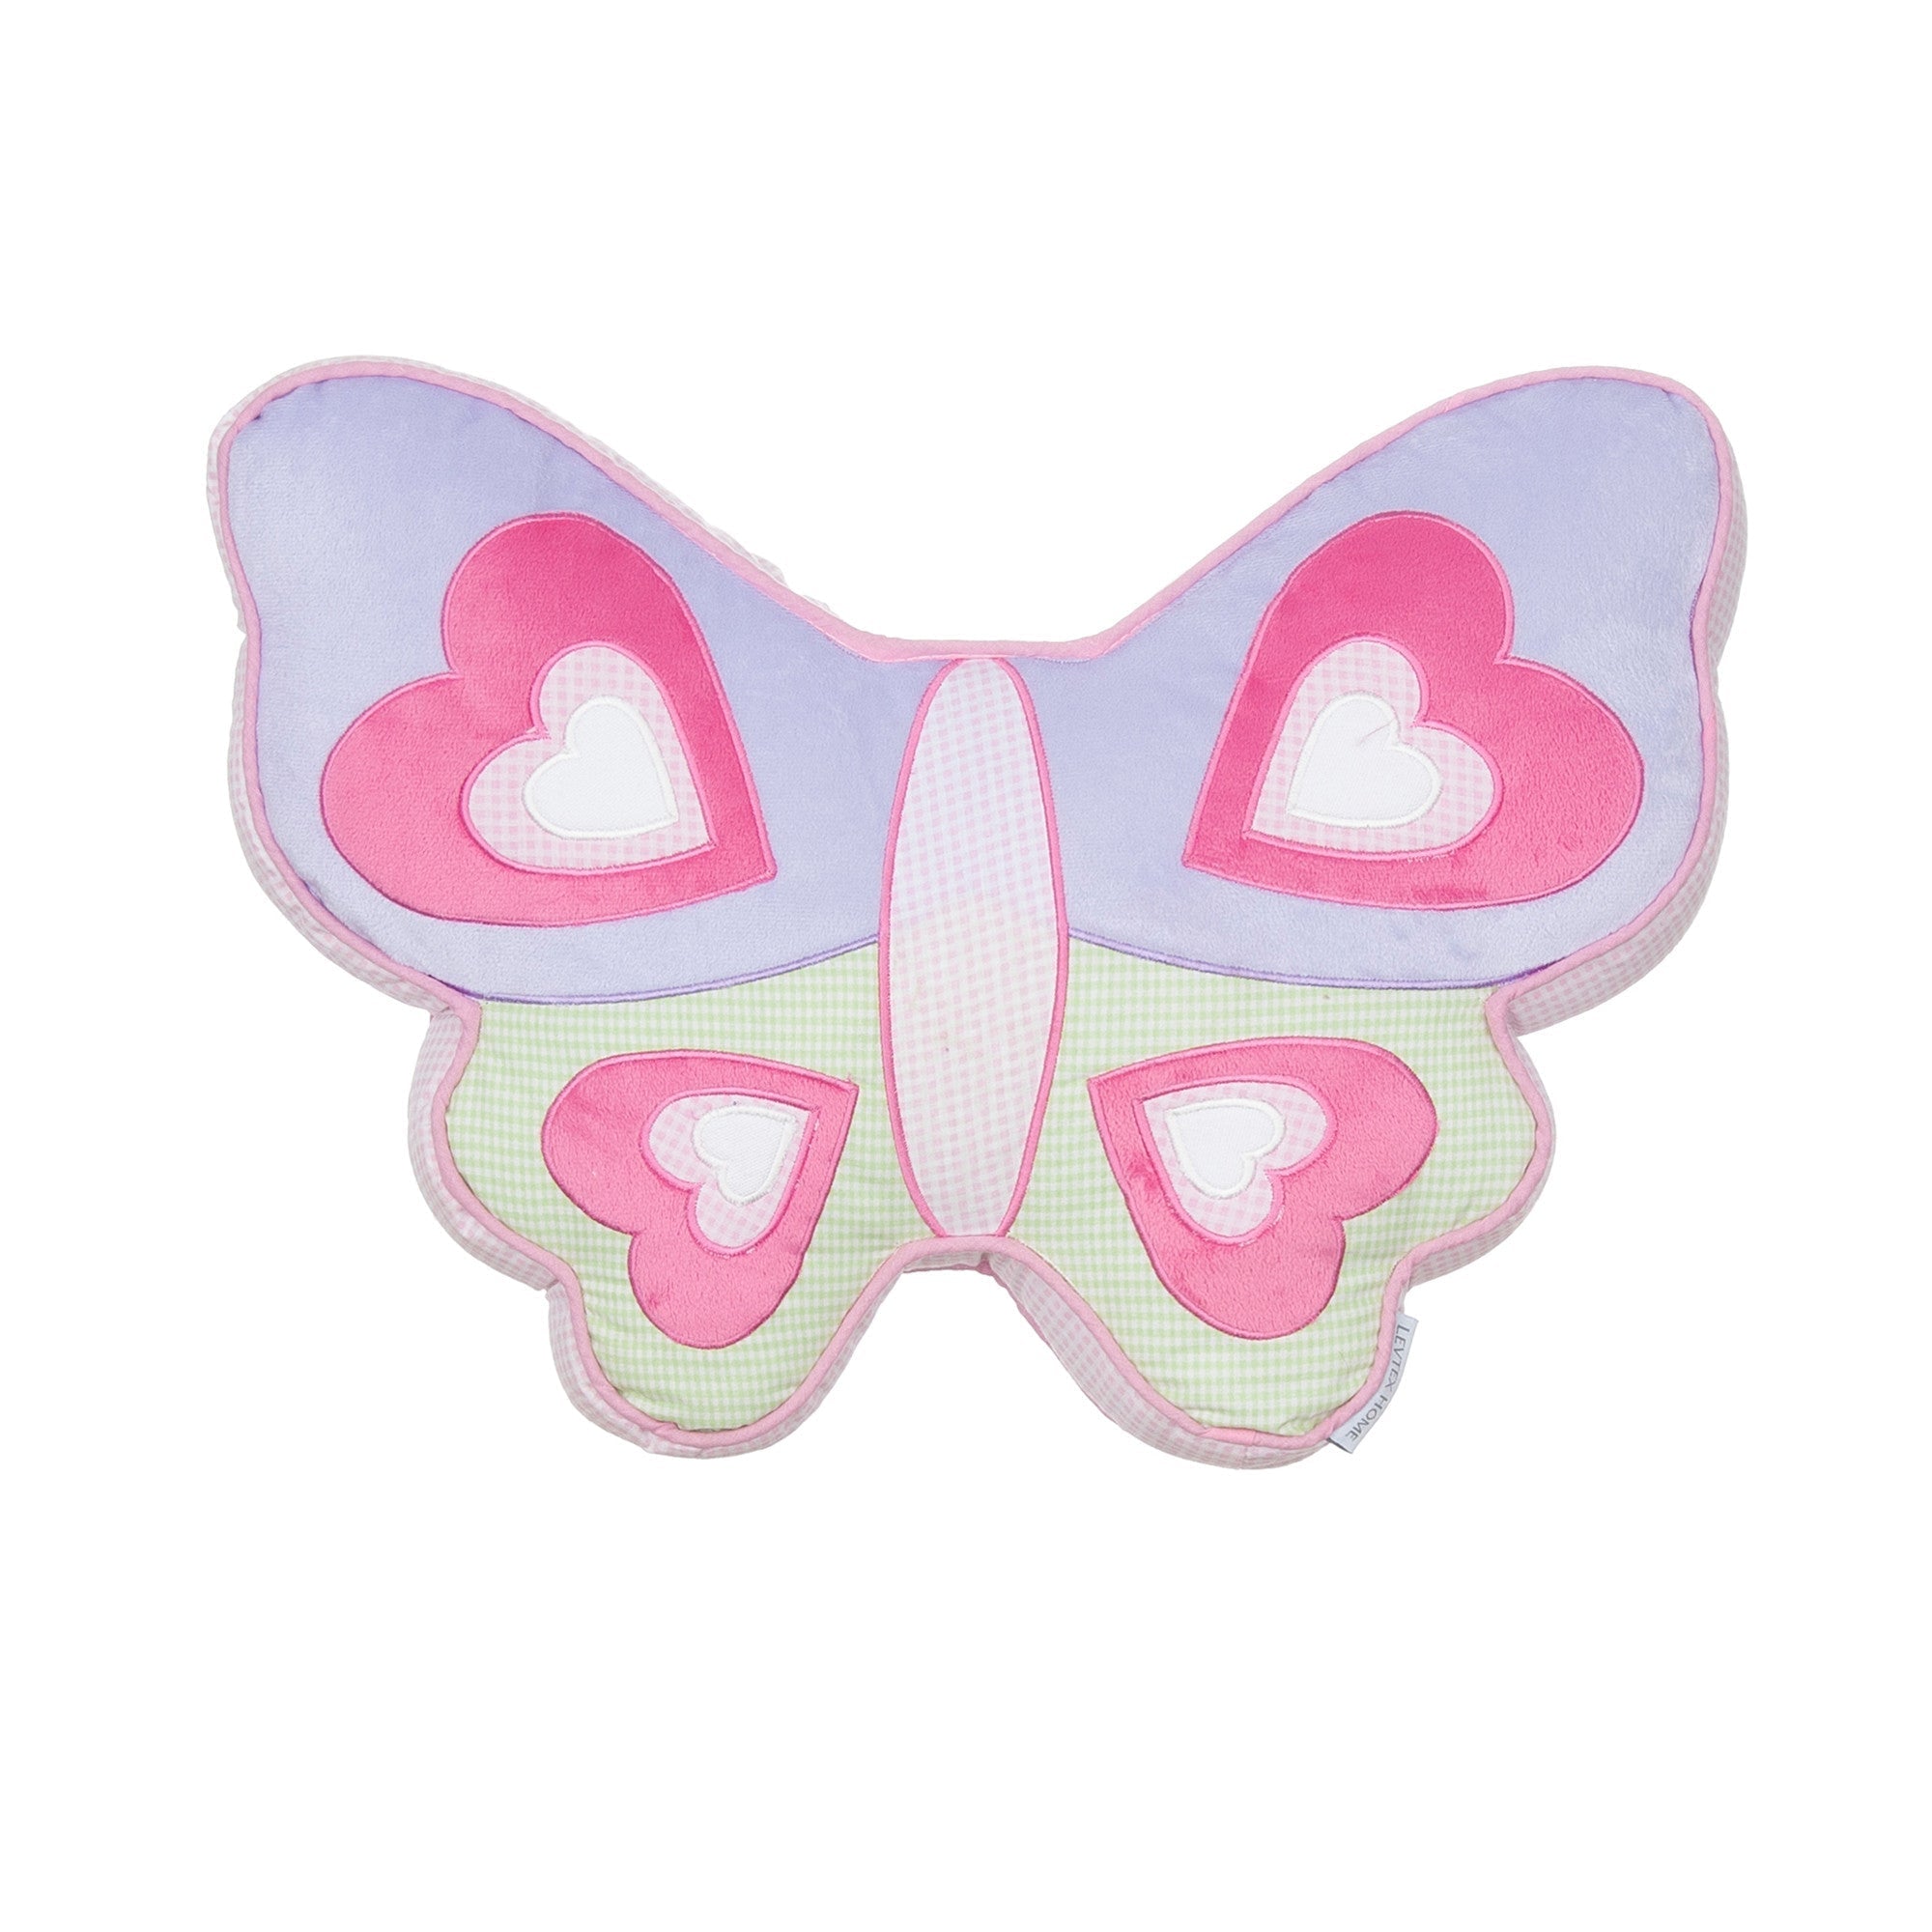 Merrill Girl Butterfly Shaped Pillow